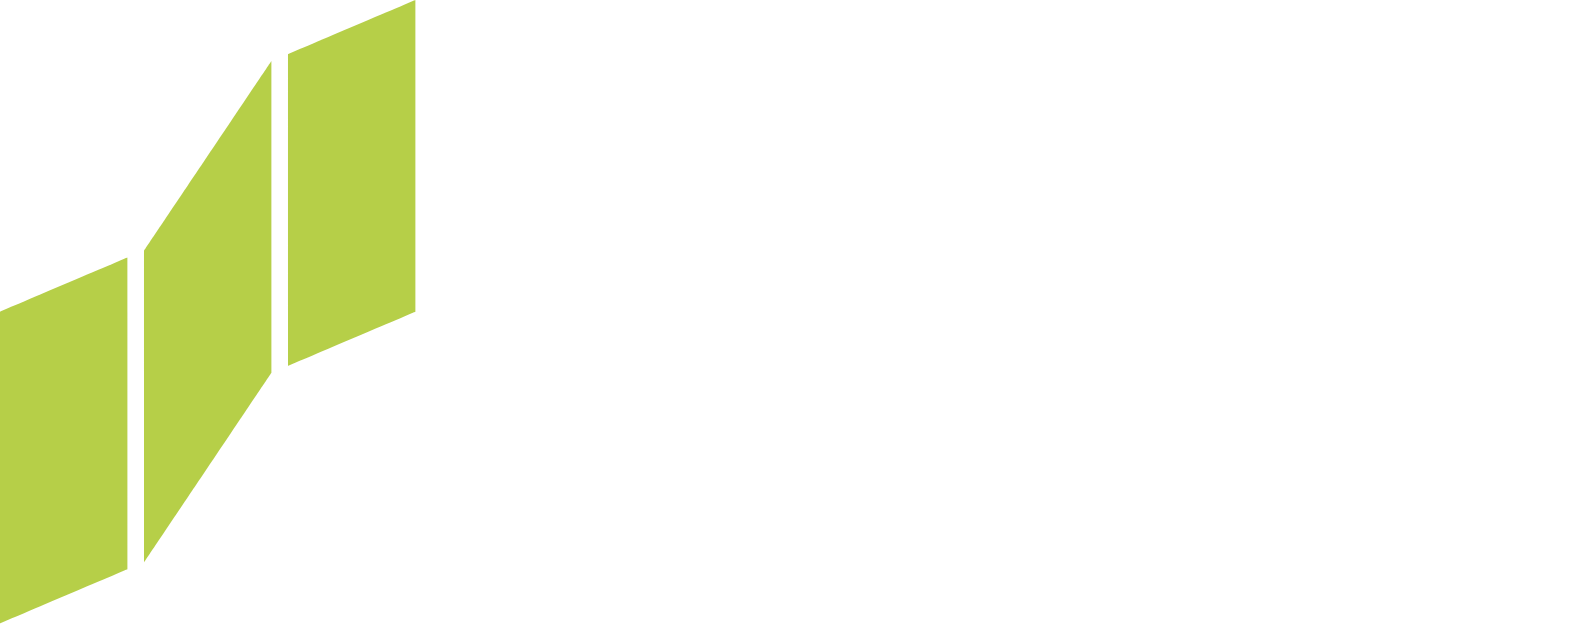 Sumitomo Mitsui Financial Group Logo groß für dunkle Hintergründe (transparentes PNG)